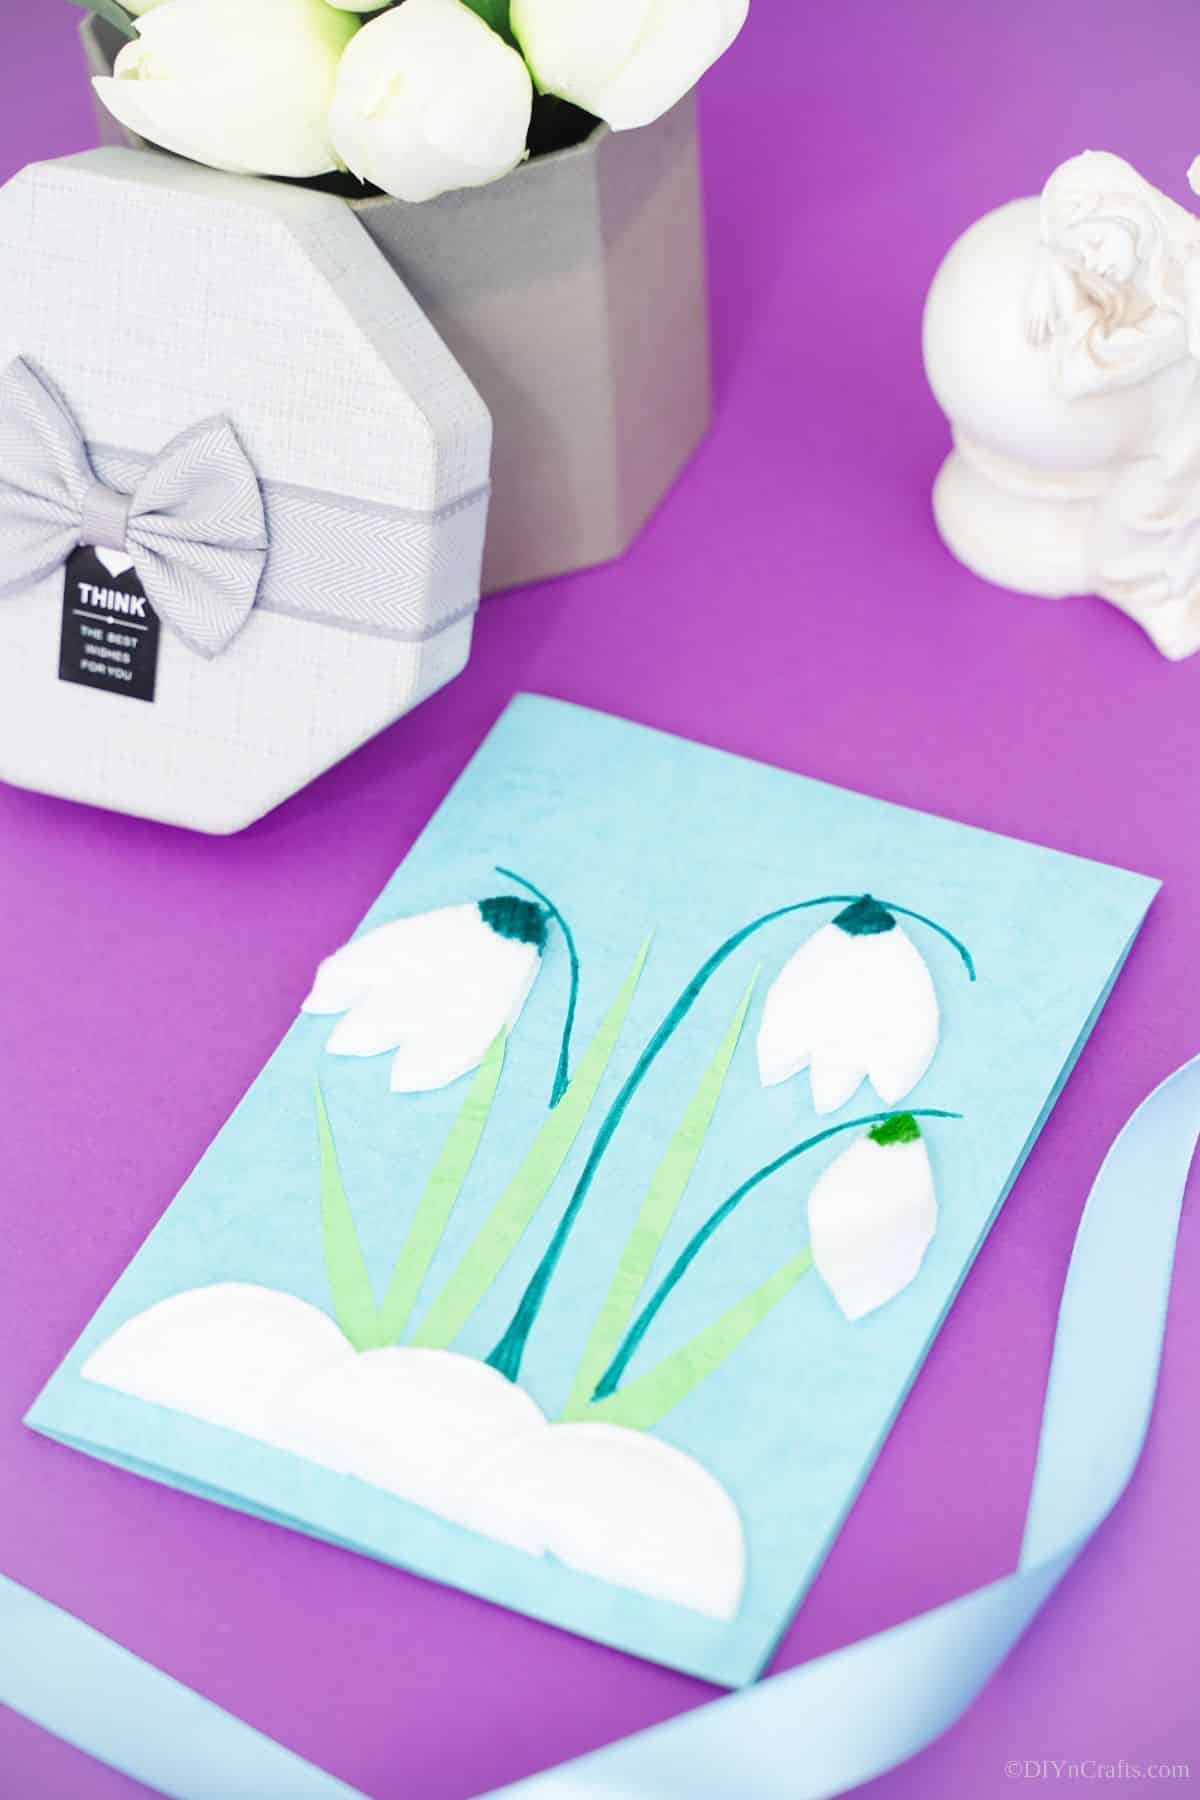 tulip handmade card on purple table by gift box